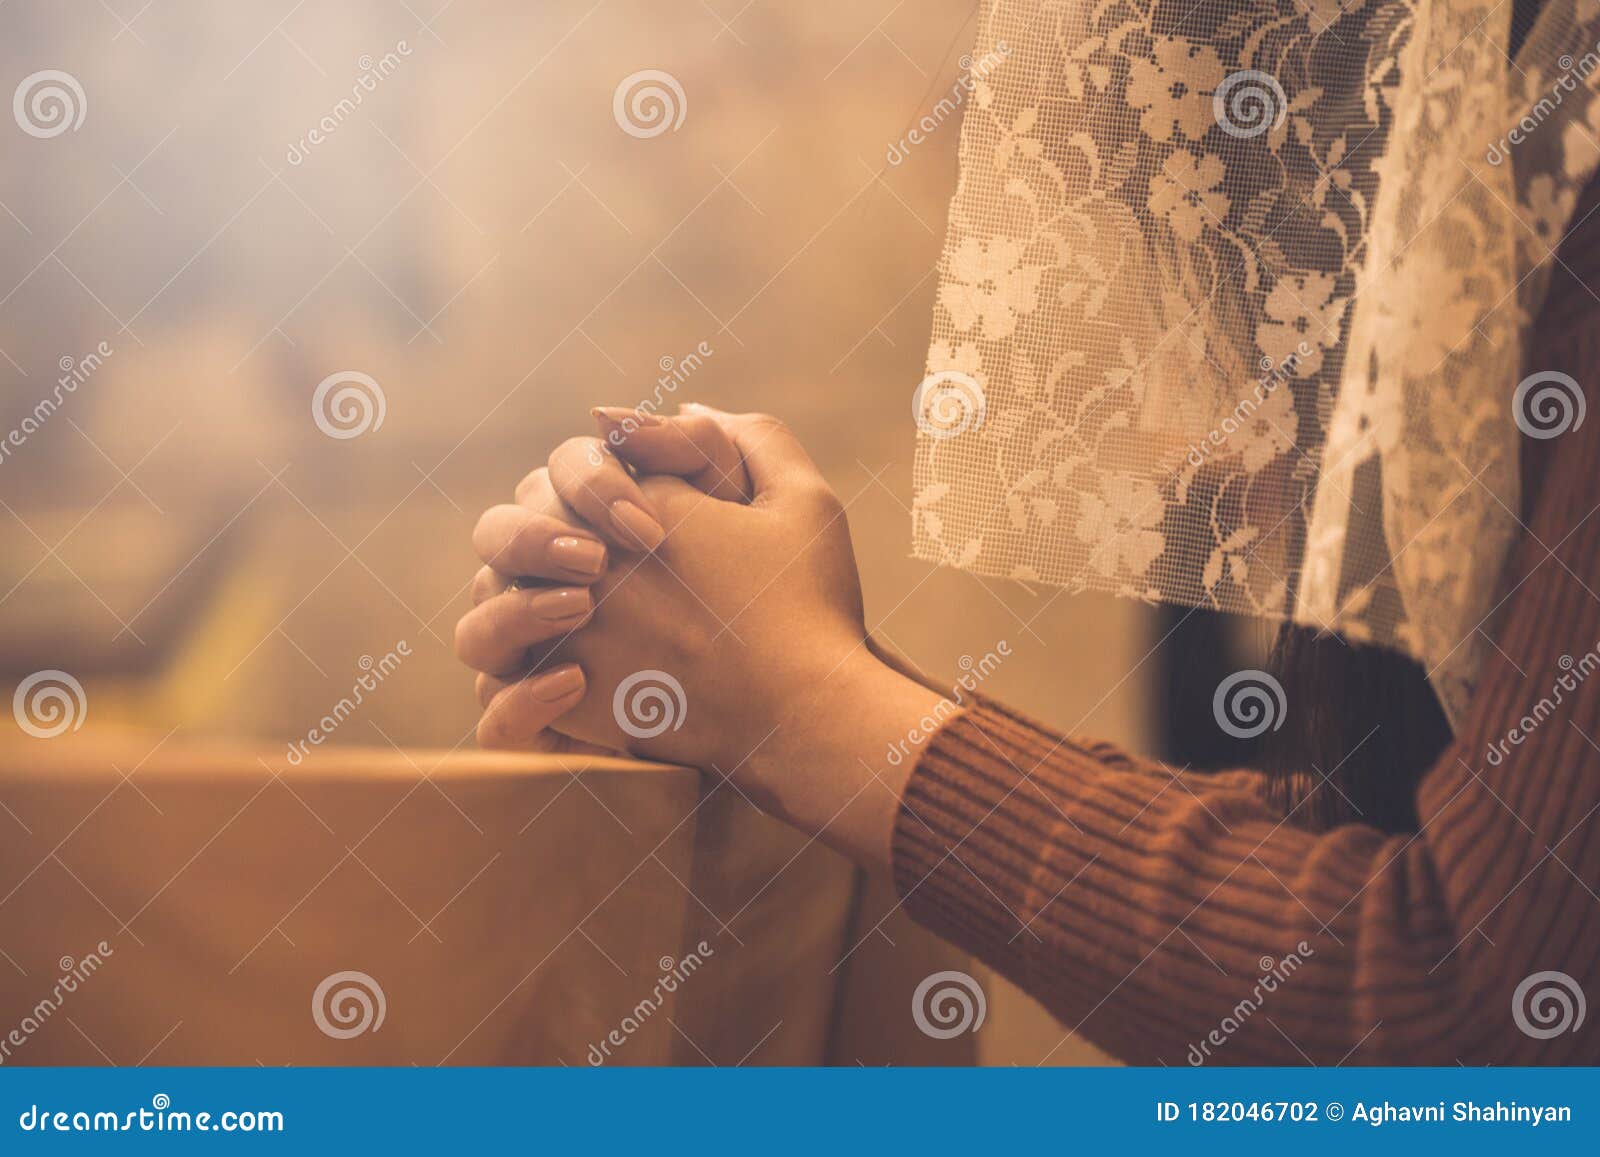 Woman praying in church stock photo. Image of seat, bible - 182046702